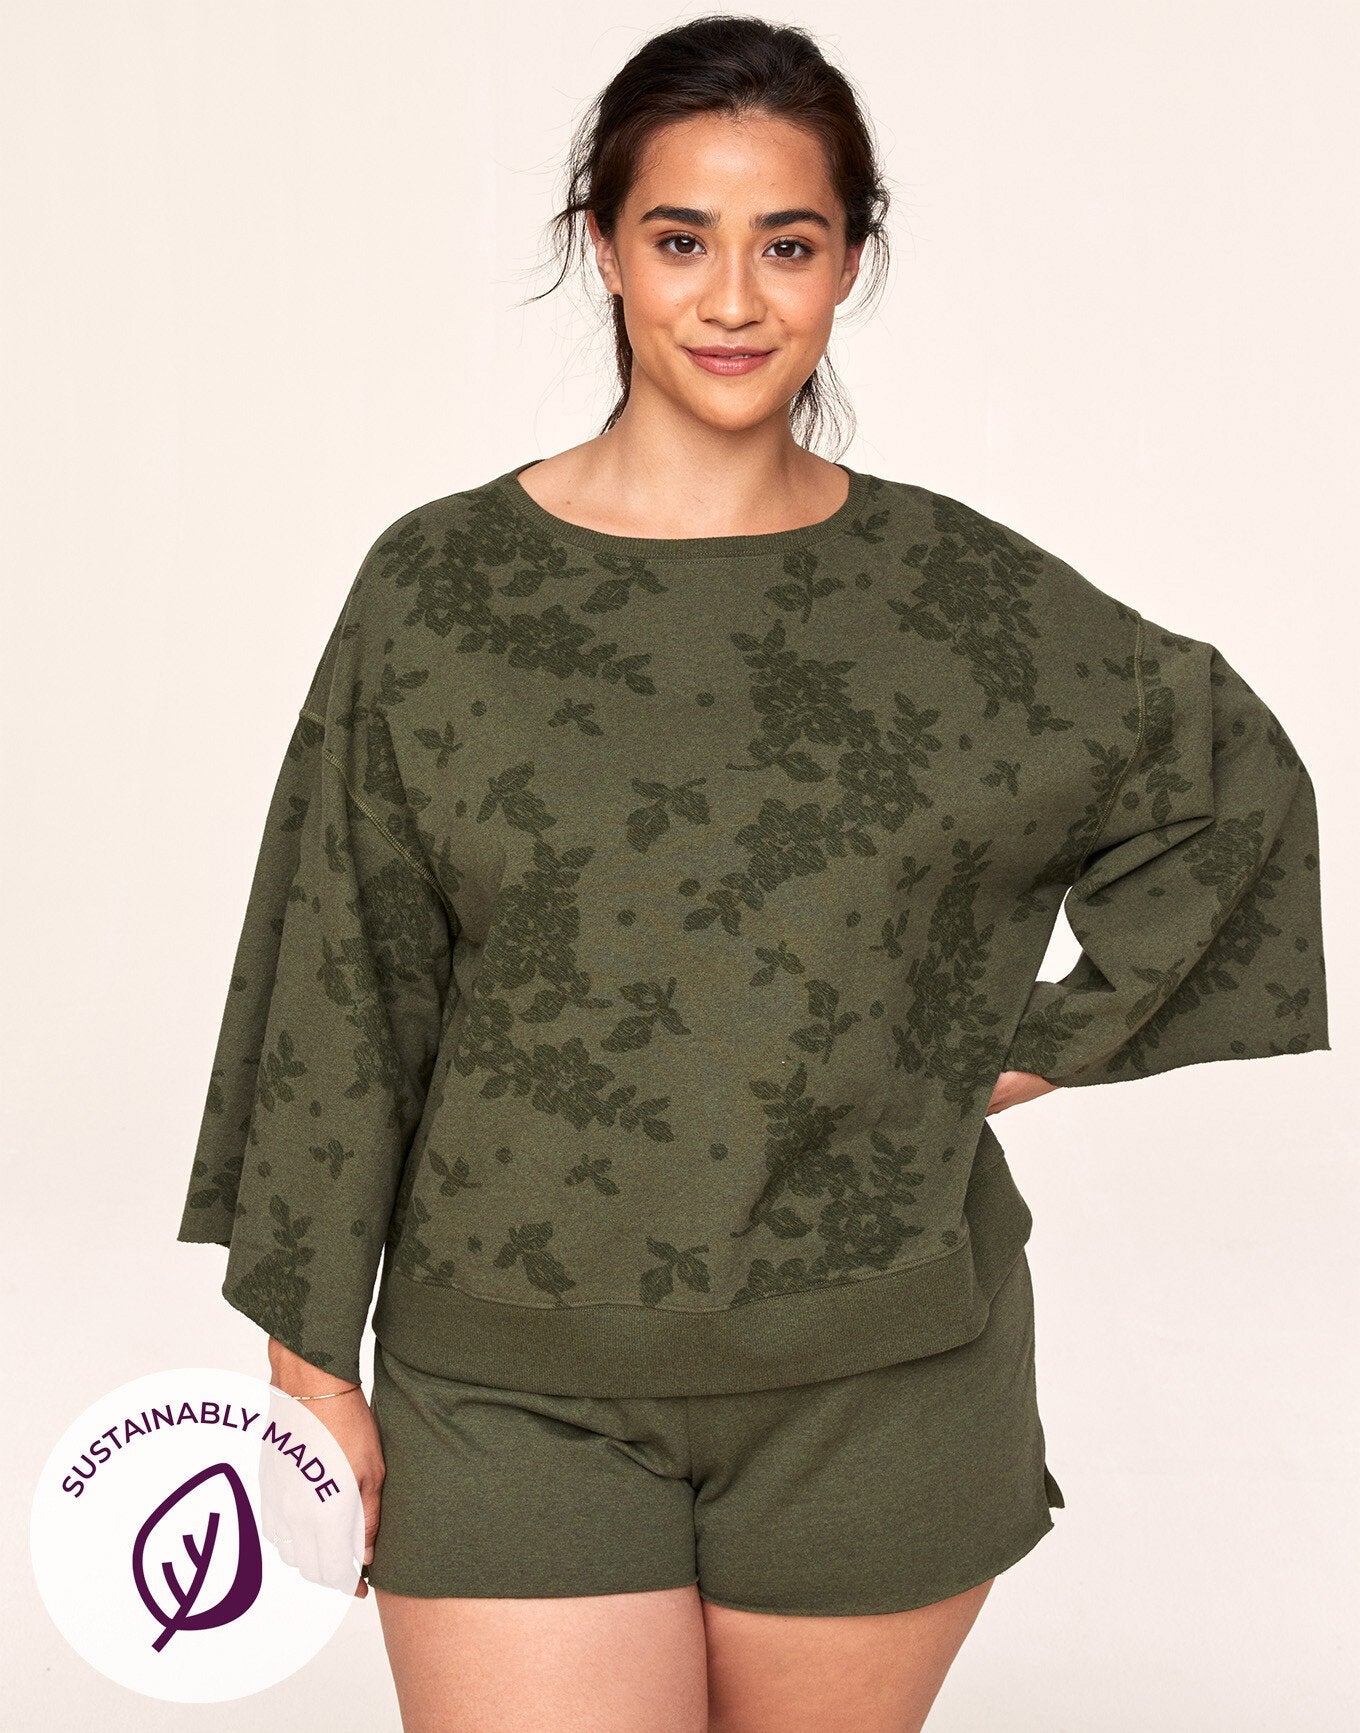 Adore Me Bailey Sweatshirt & Short Set in color Capulet Olive and shape pj